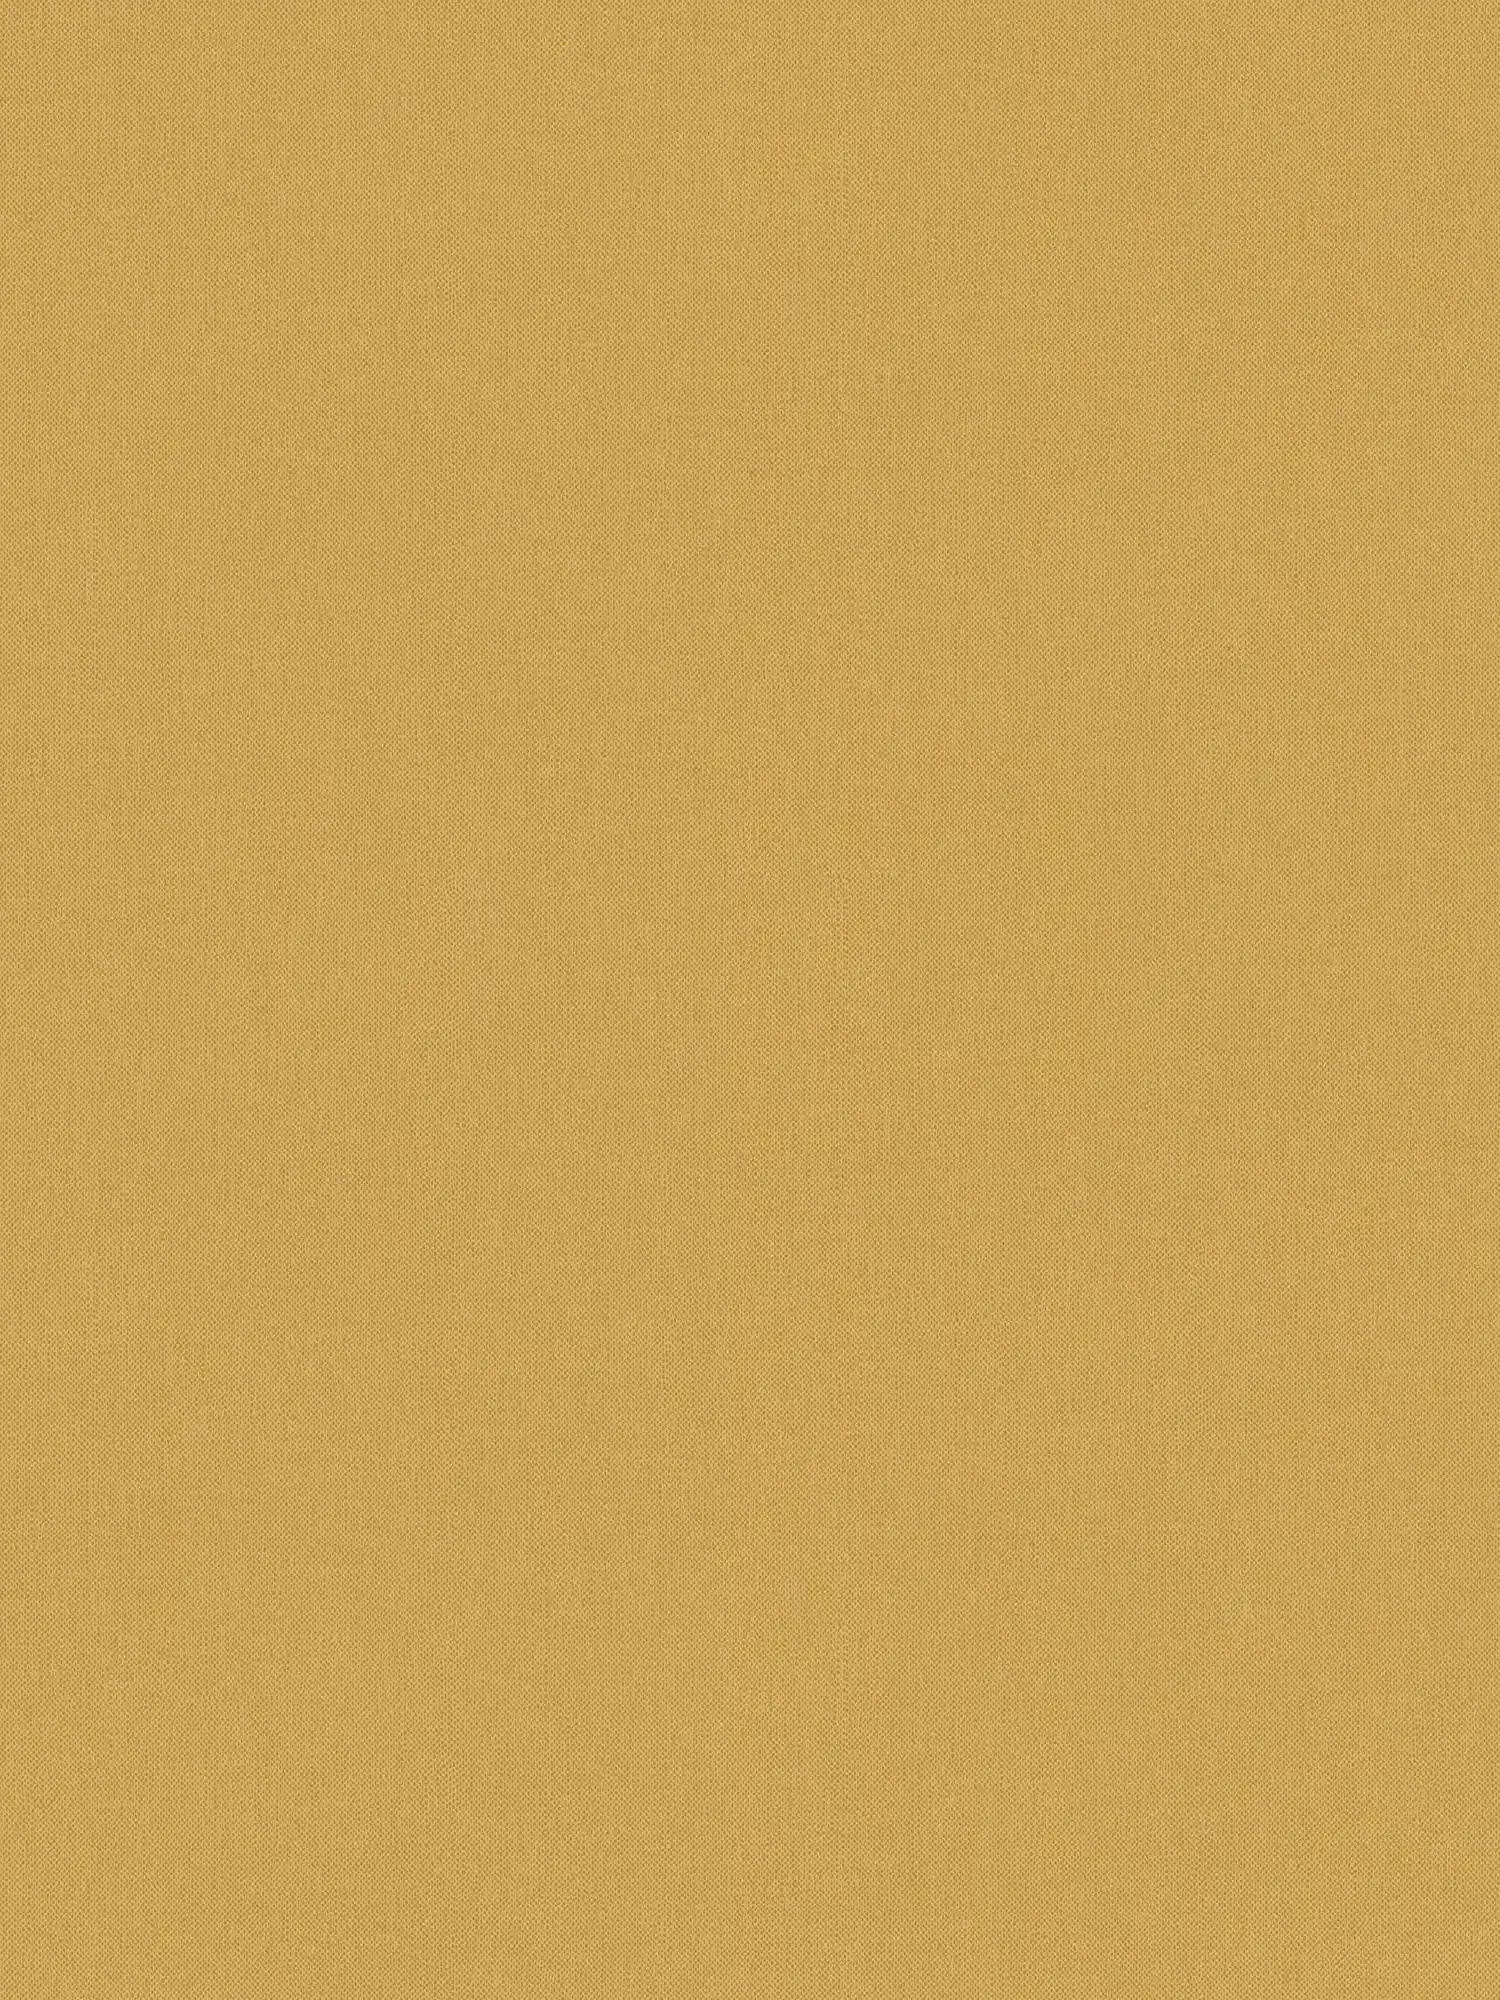 Papel pintado de aspecto de lino amarillo mostaza liso y textura textil mate - amarillo
